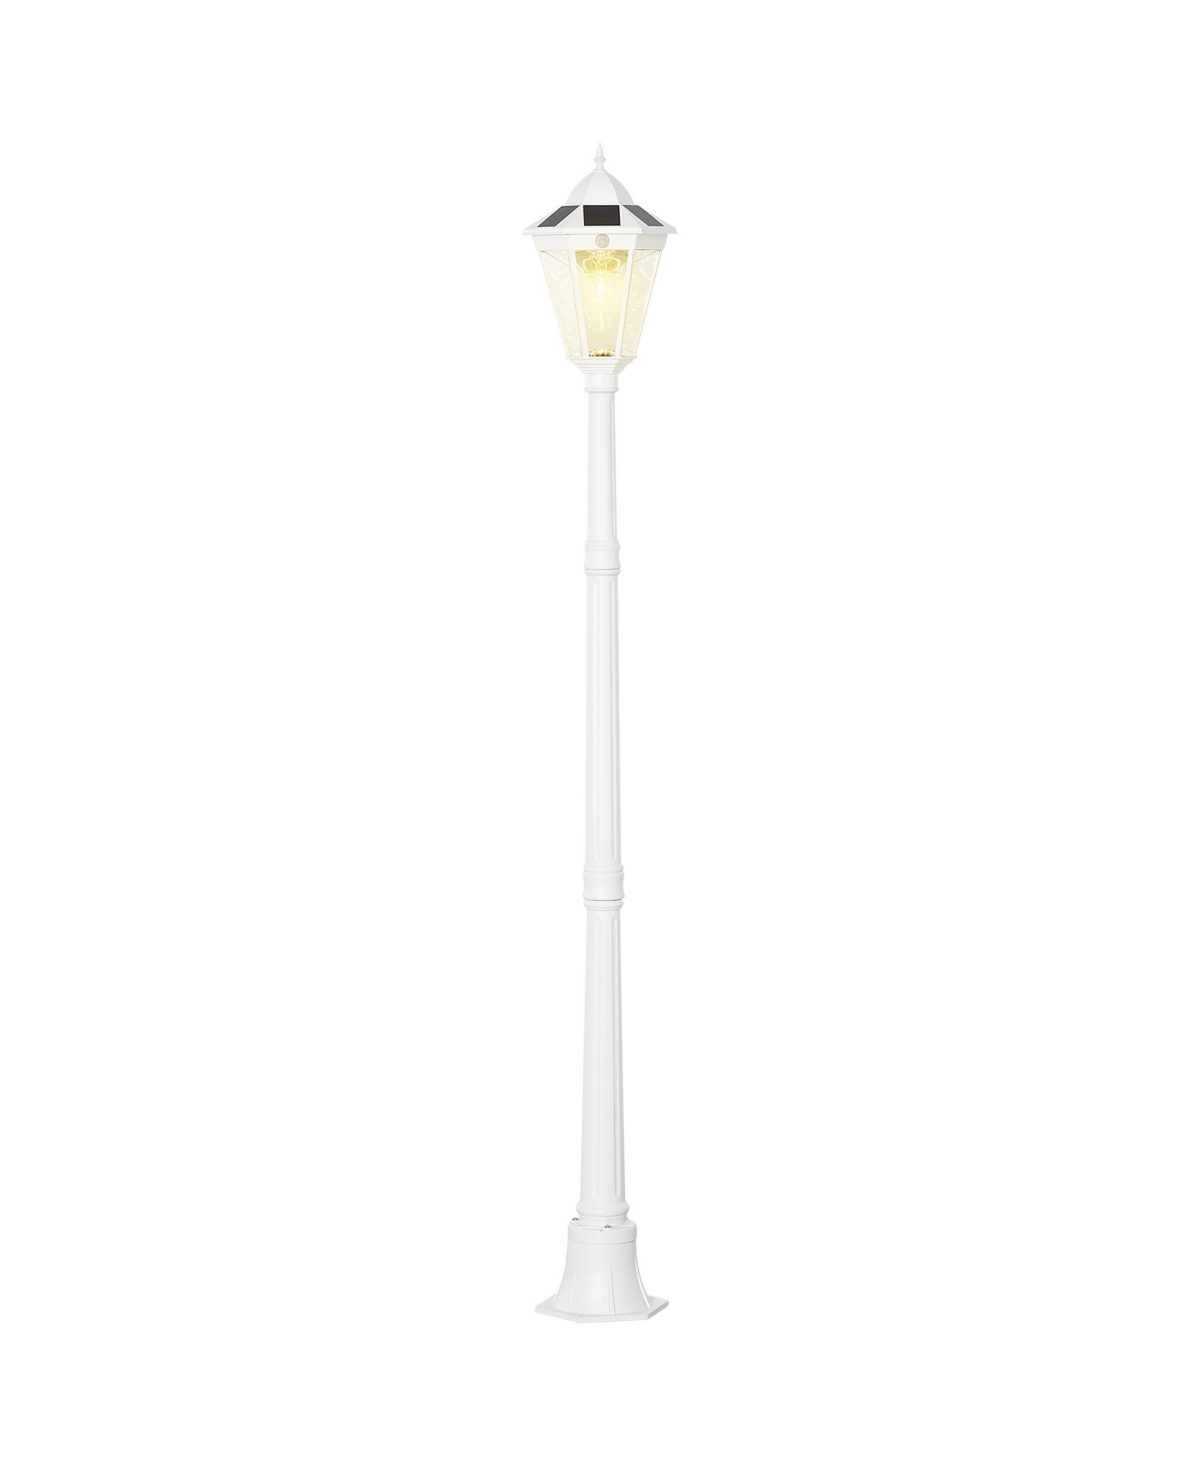 77" Solar Lamp Post Light, Waterproof Aluminum Outdoor Vintage Street Lamp, Motion Activated Sensor Pir, Adjustable Brightness, for Garden, L